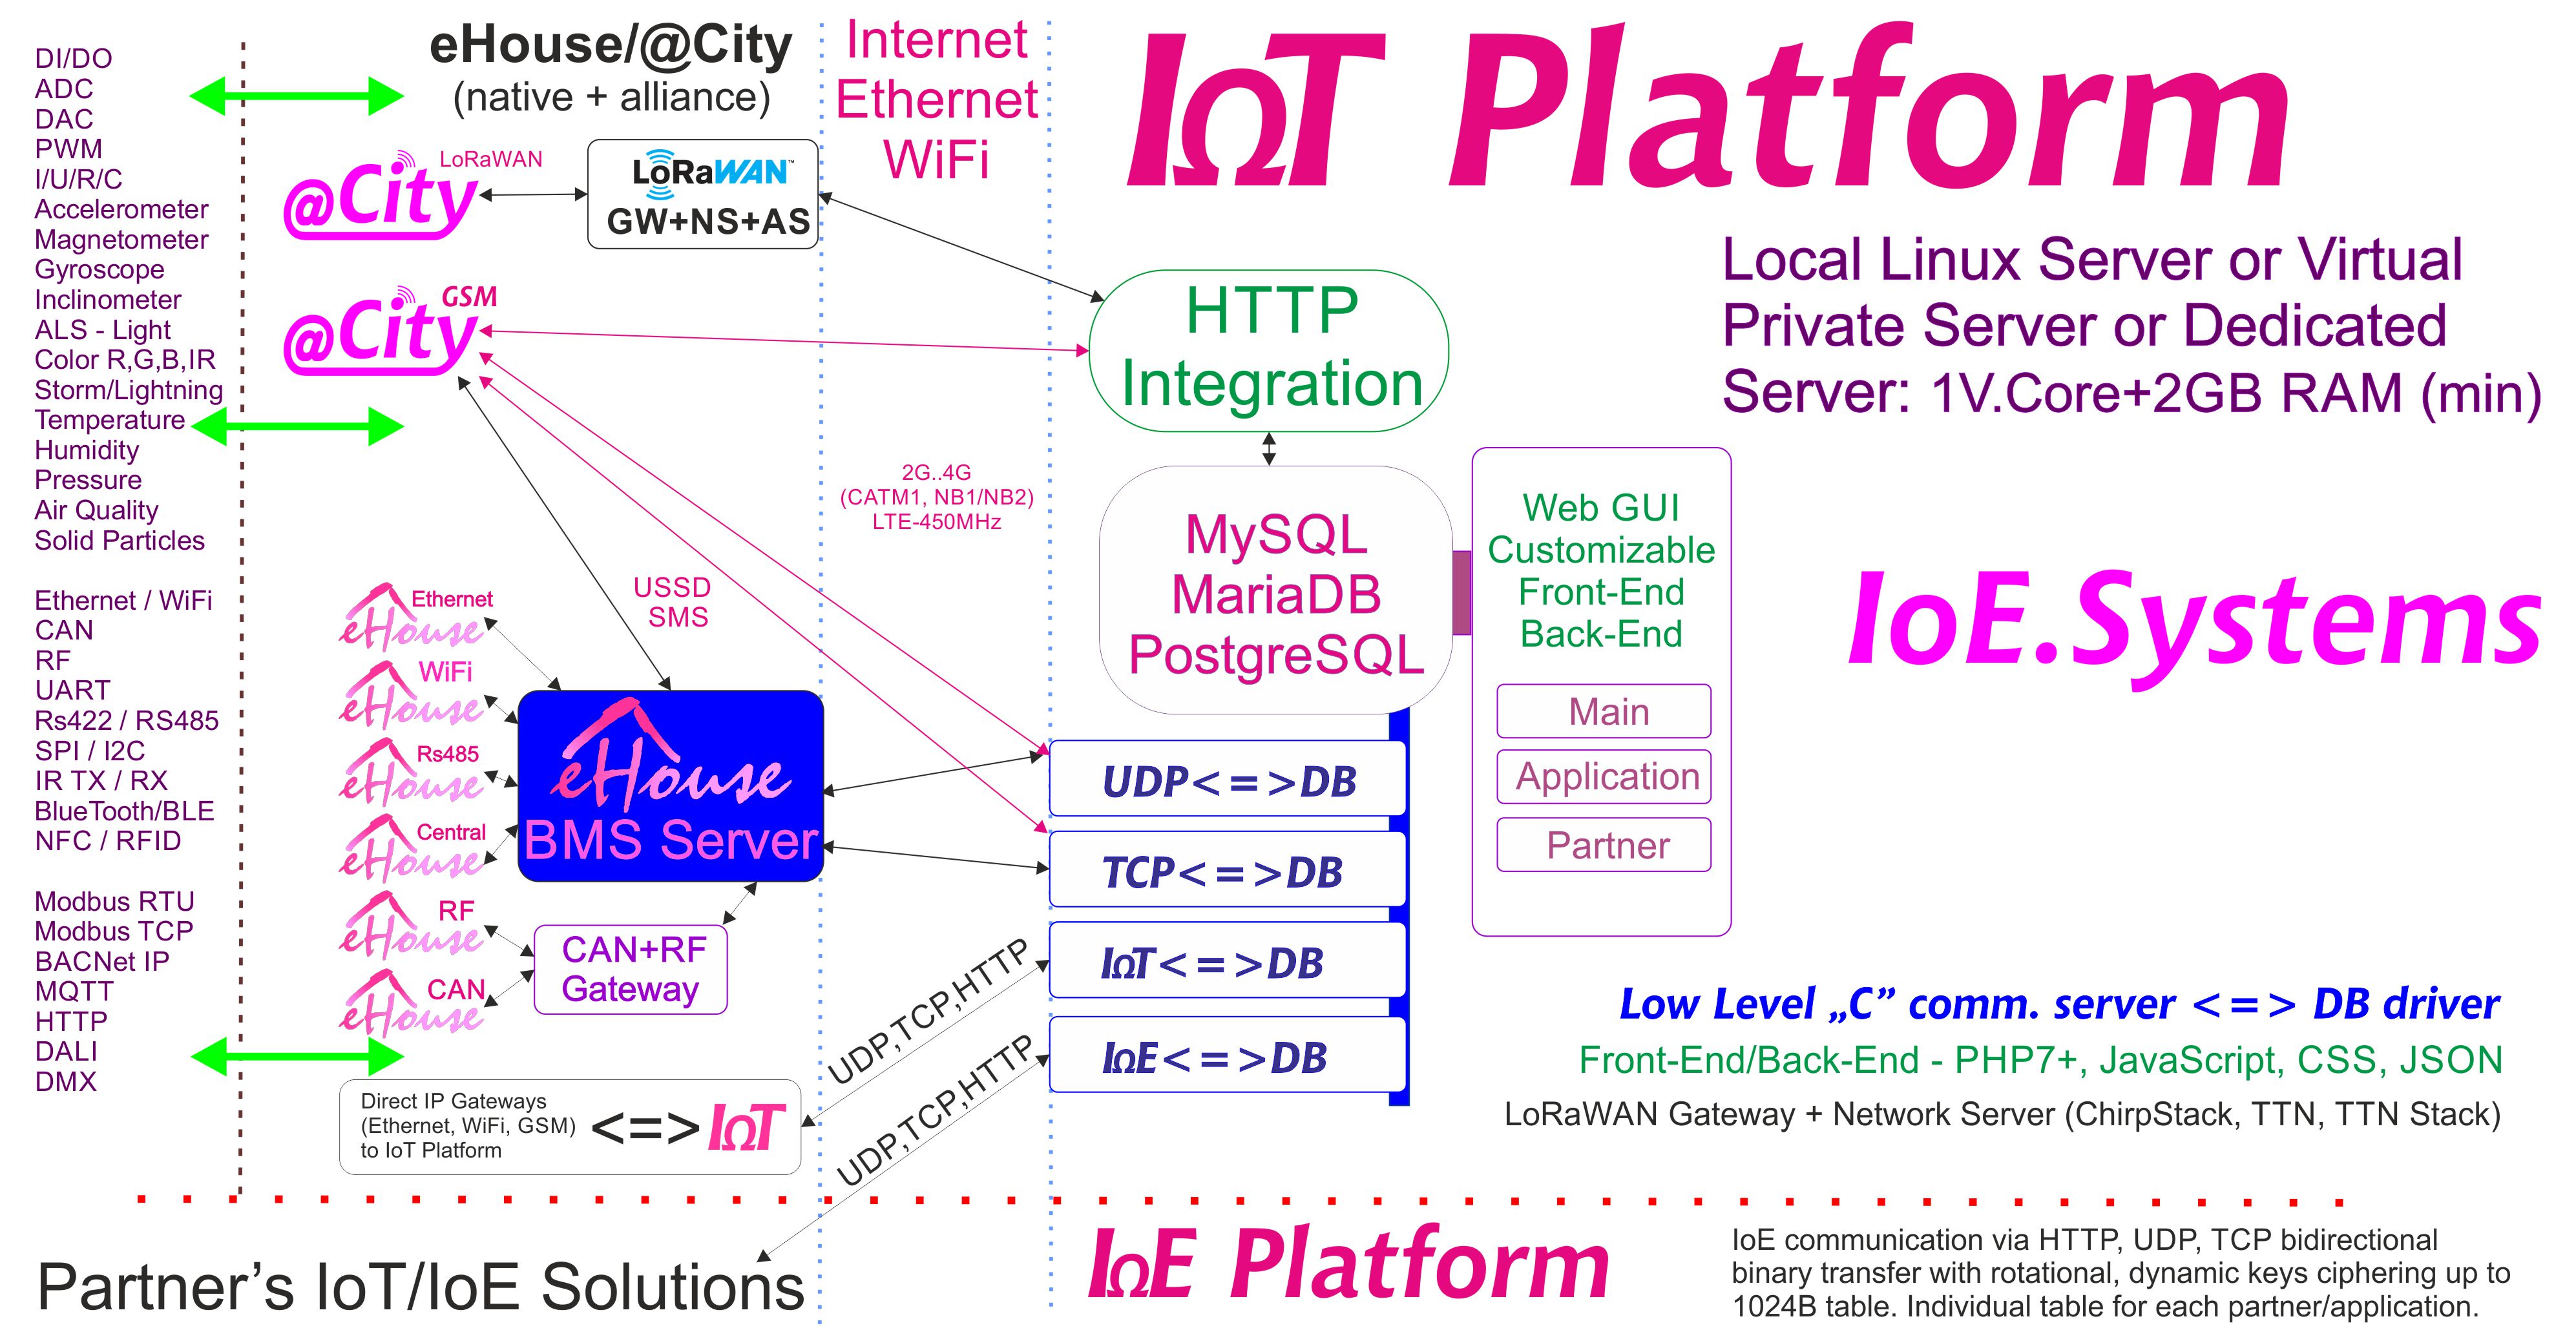 IHouse, eCity Server Software BAS, BMS, IoE, IoT Systems nePlatform